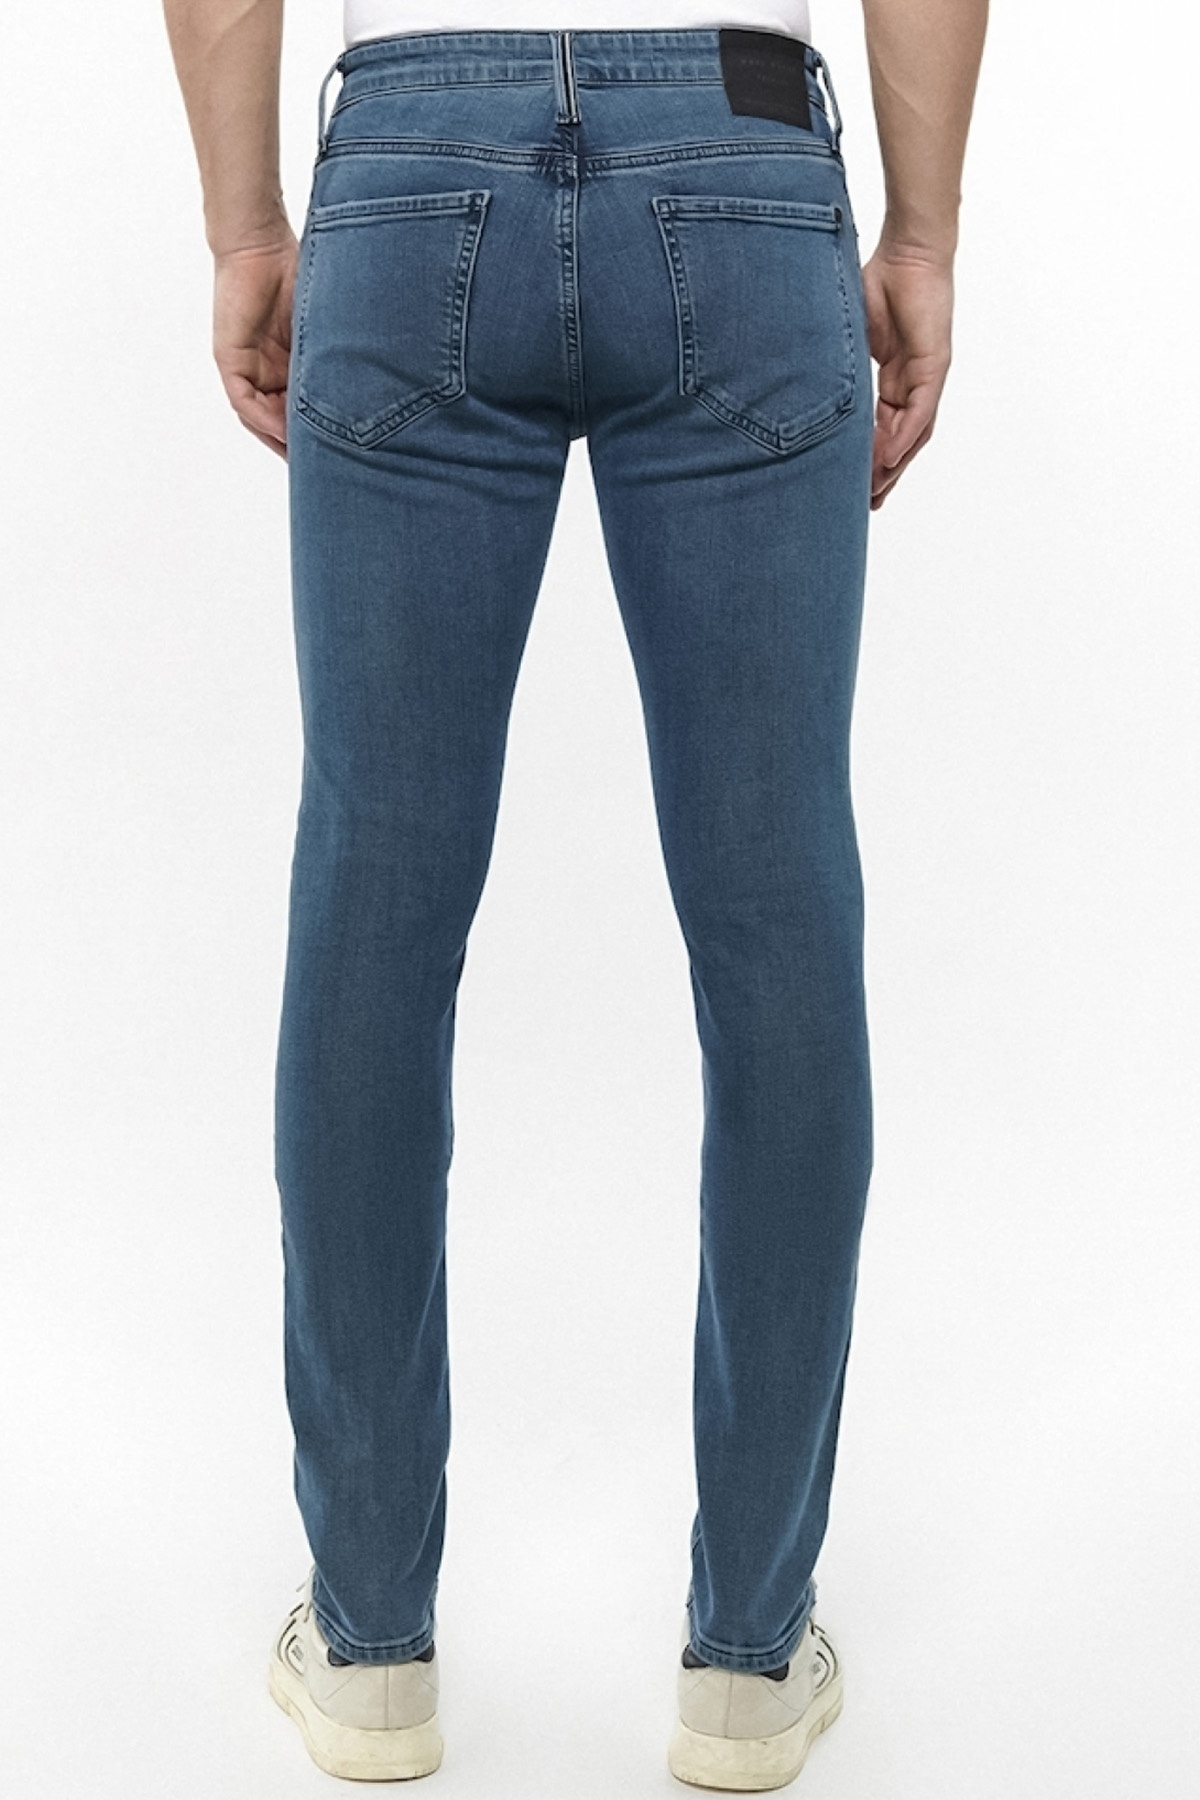 KVNÇ Skinny Gölgeli Mavi Denim Urban Black Jean Pantolon